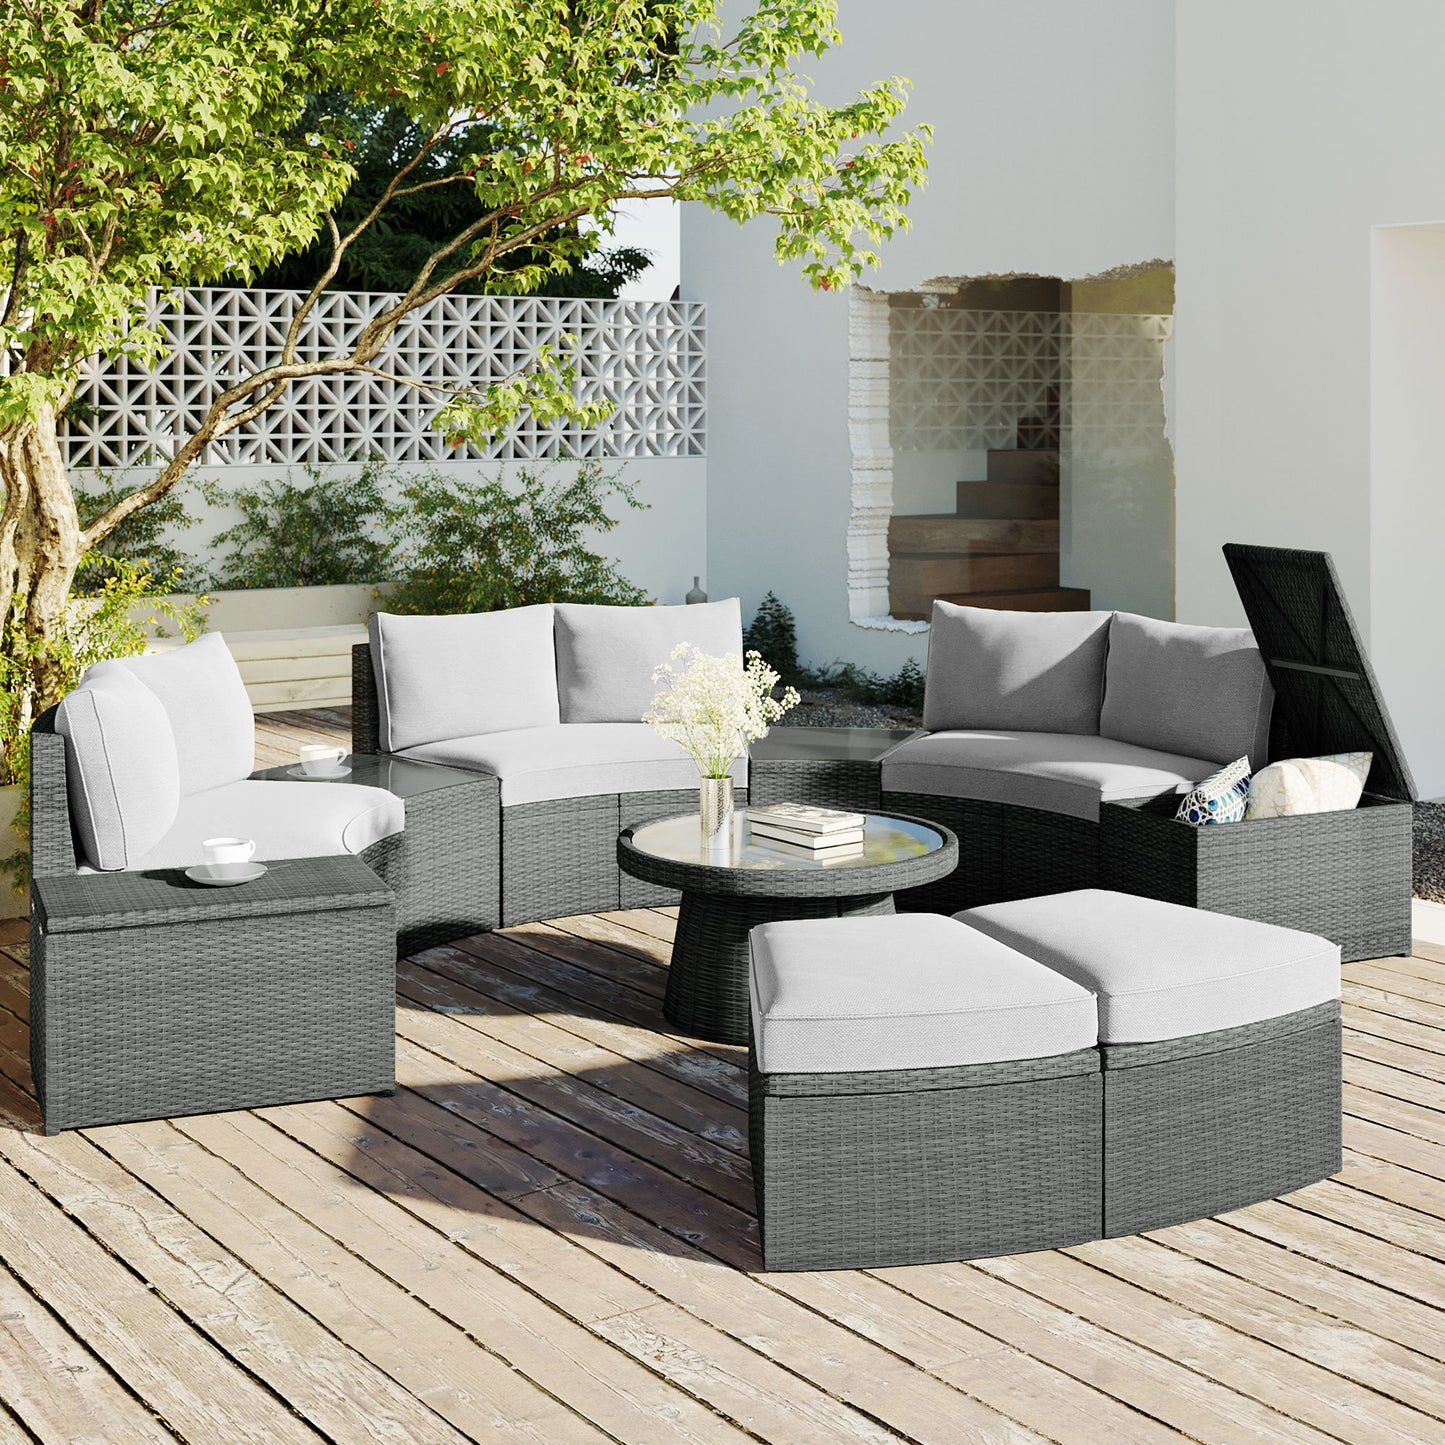 10-piece outdoor sectional half round patio rattan sofa set, light gray